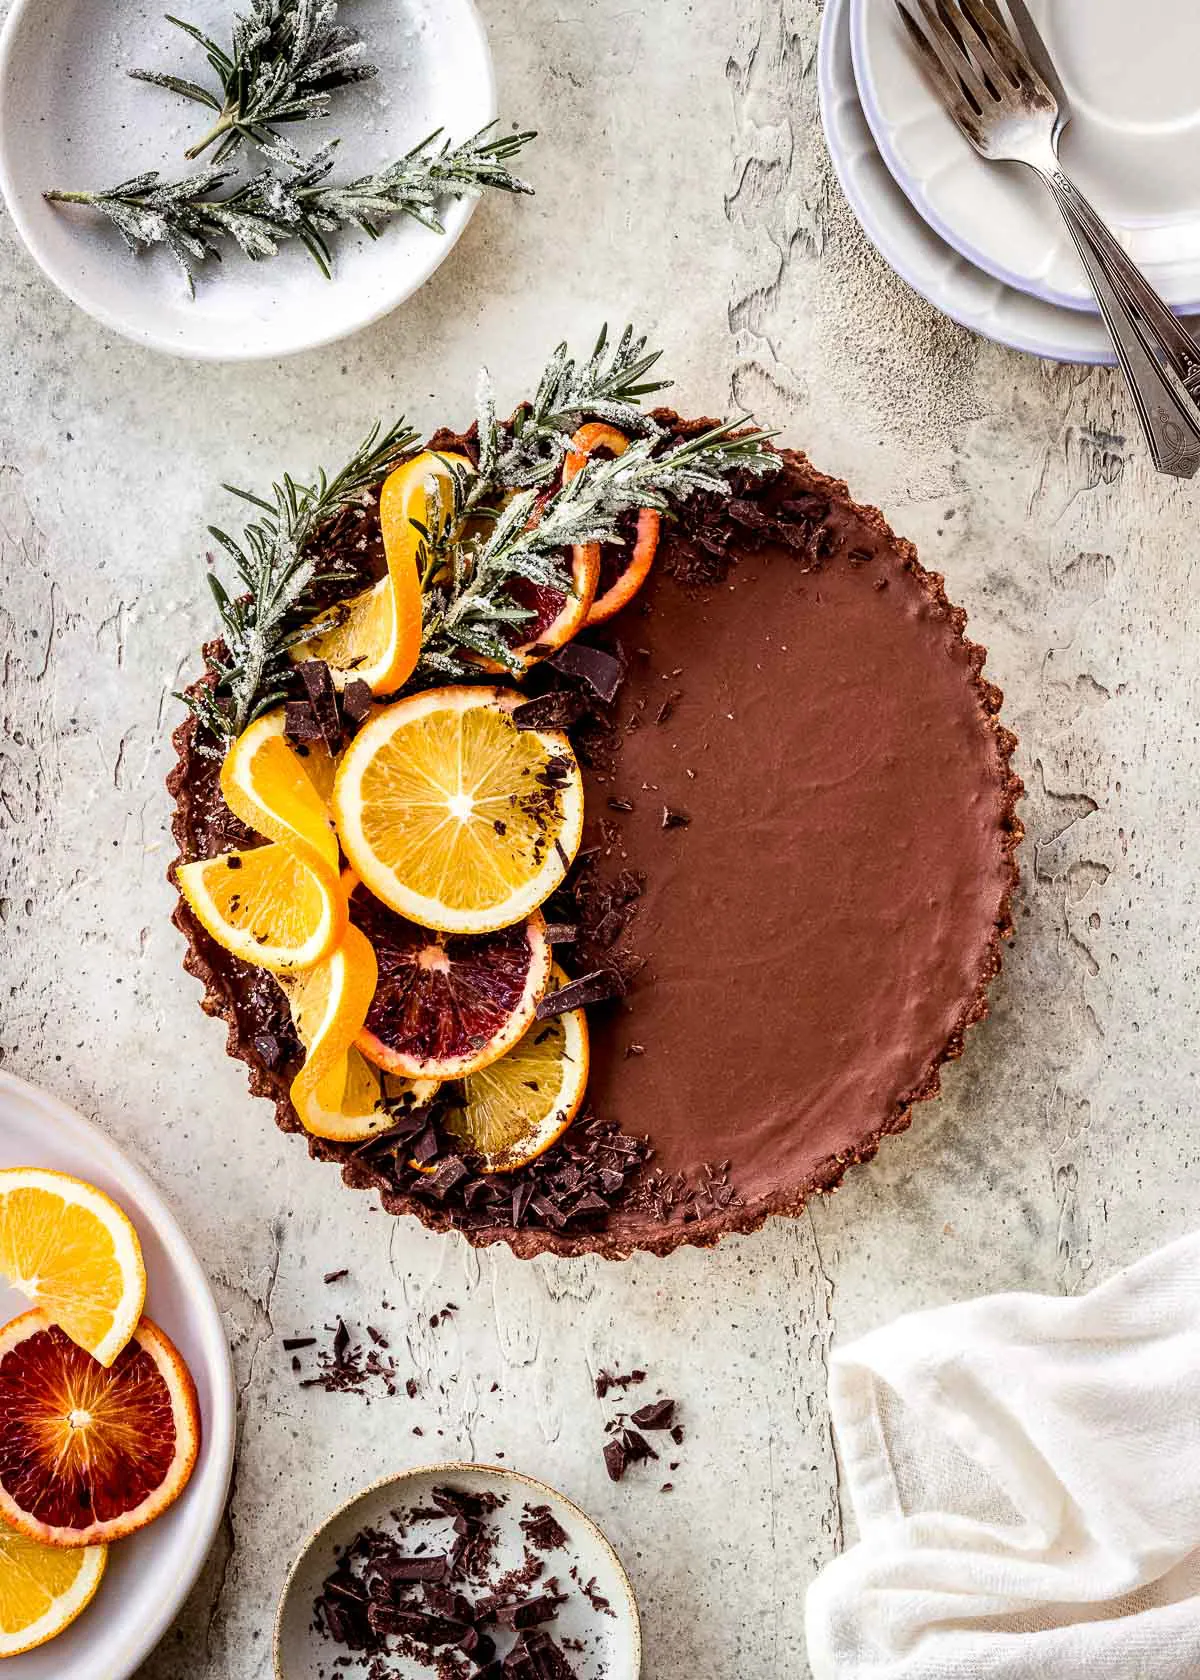 Chocolate orange tart decorated with sprigs of rosemary and orange slices.